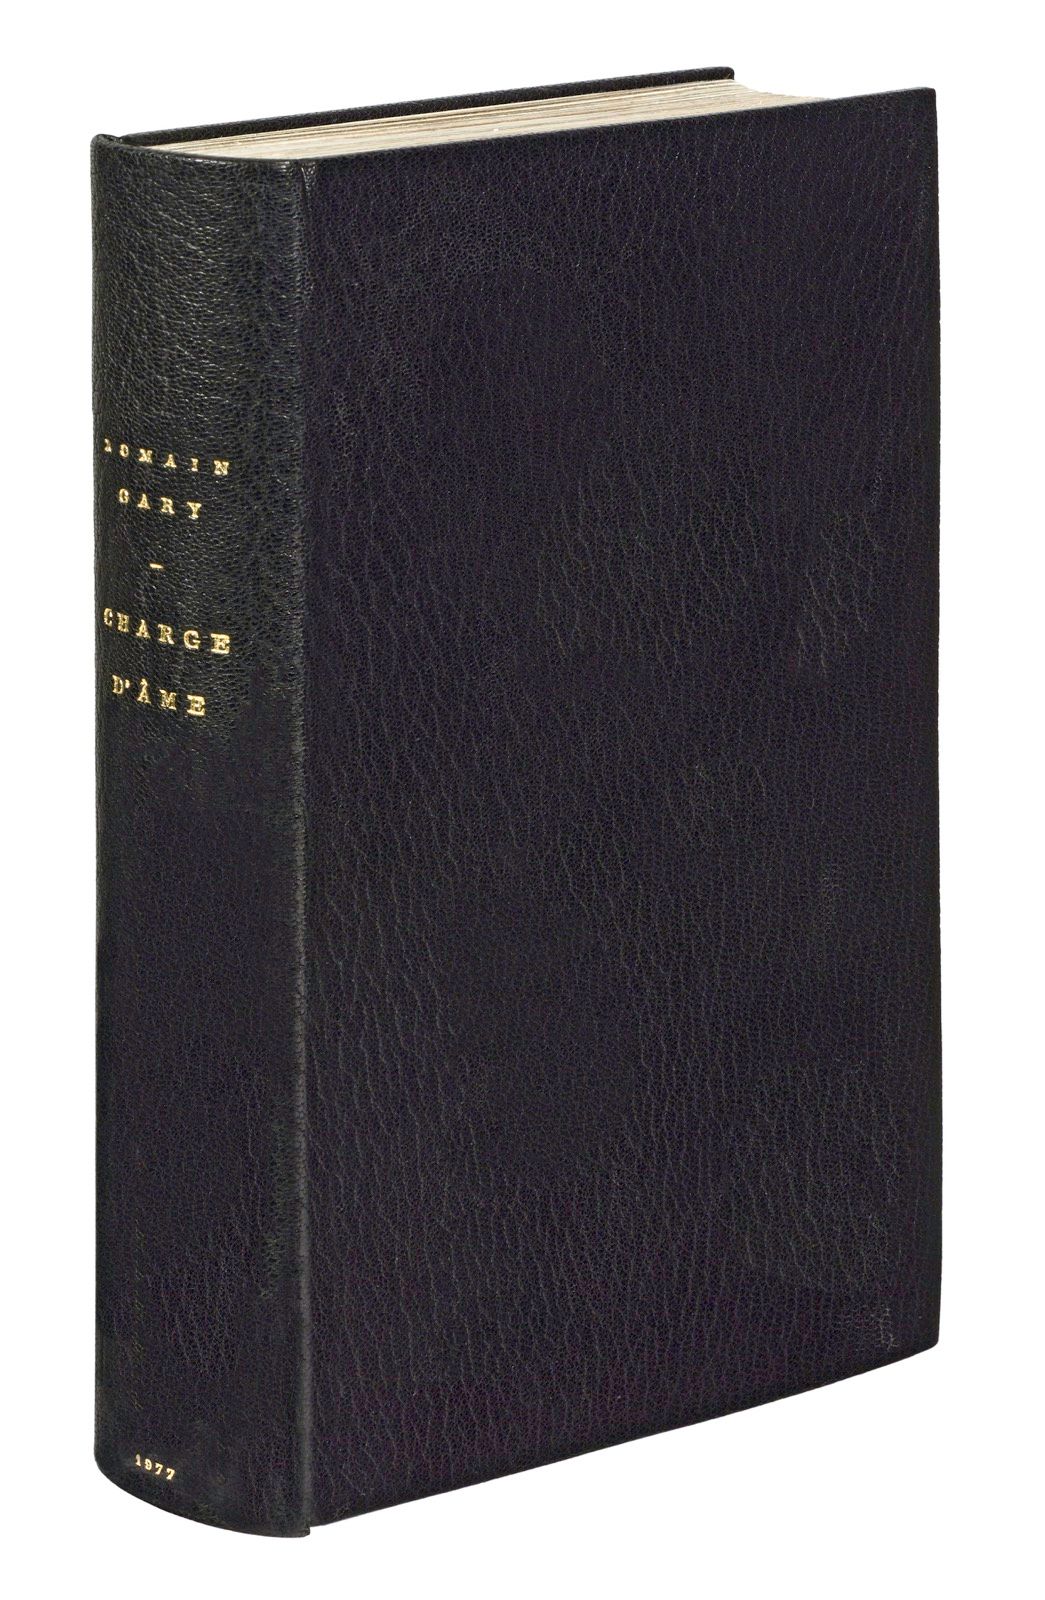 GARY (Romain). Charge d'âme. Paris, Gallimard, 1977. In-8, maroquin noir janséni&hellip;